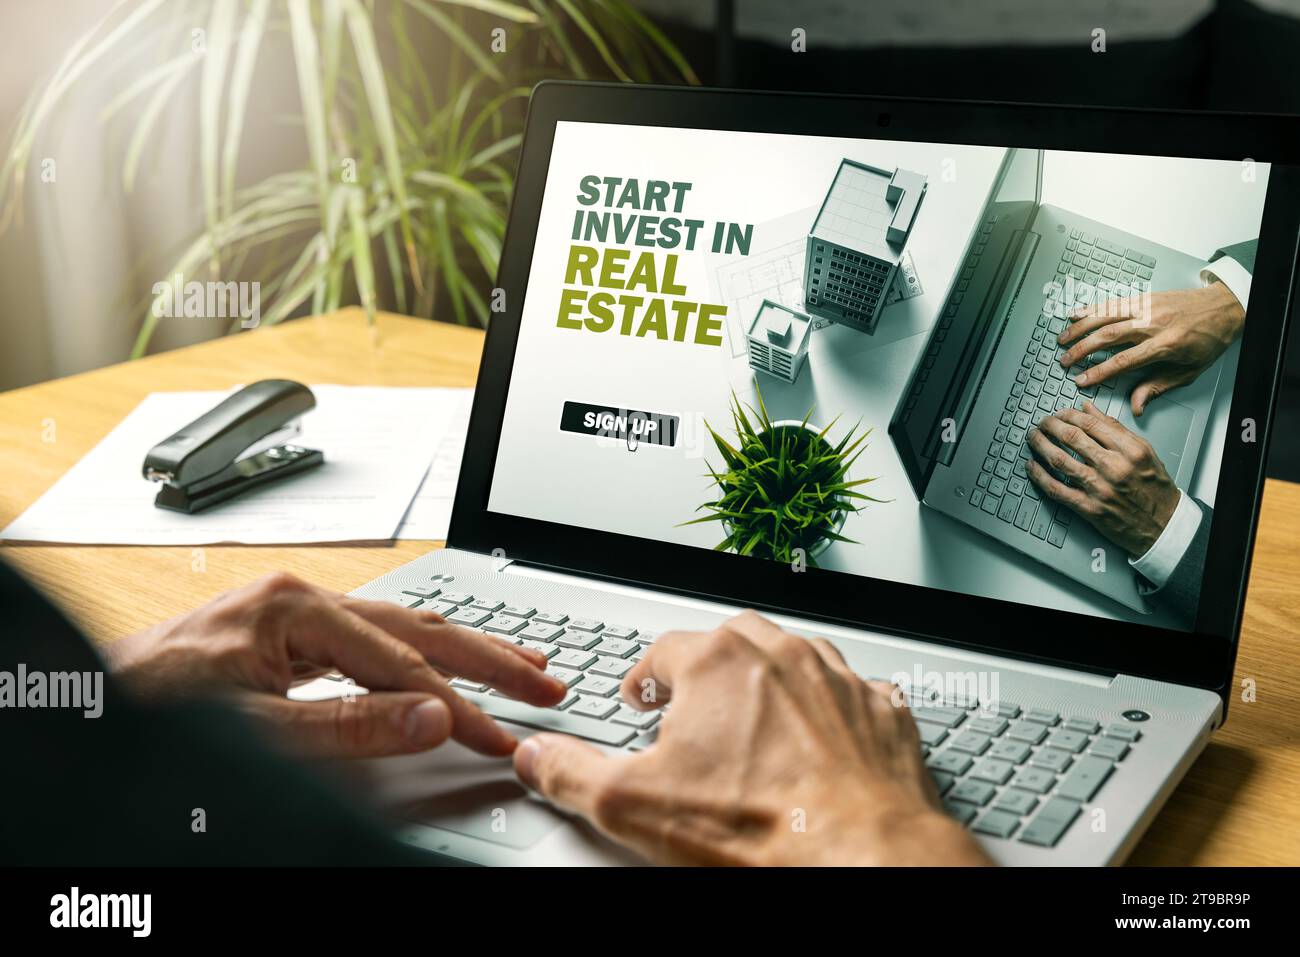 man using laptop to start invest in online real estate crowdfunding platform Stock Photo